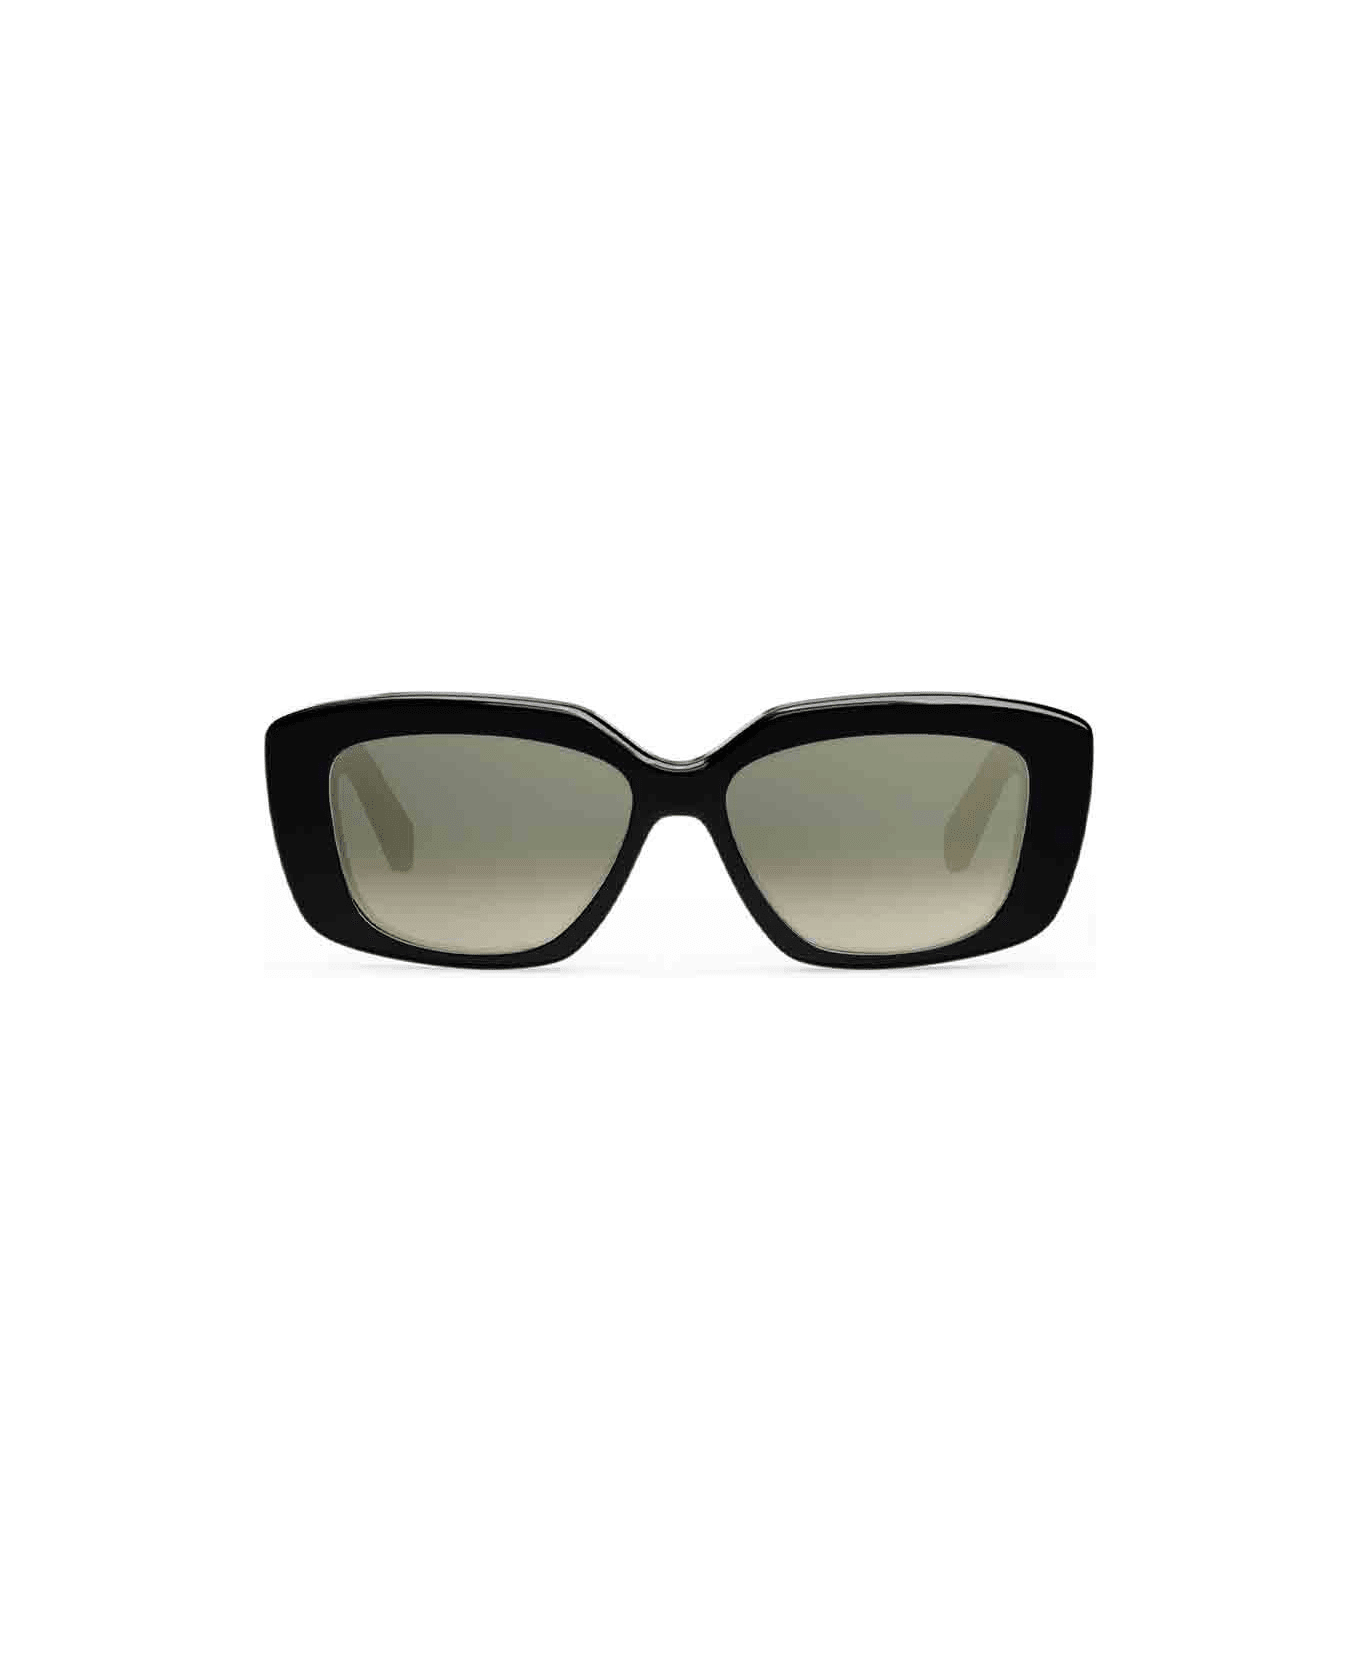 Celine Sunglasses - Nero/Verde